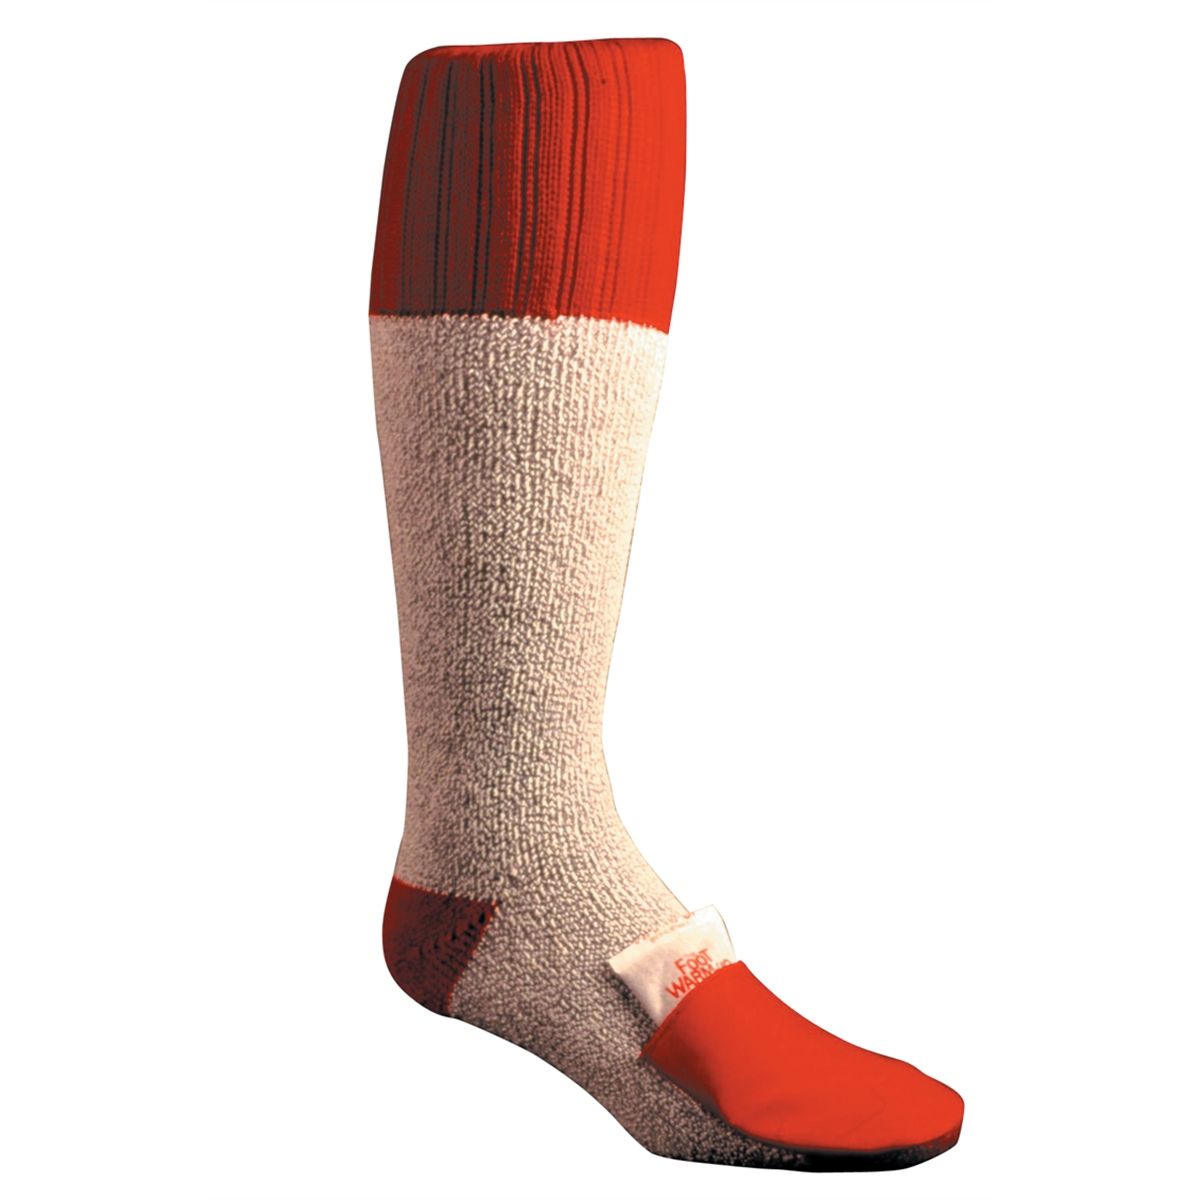 Acrylic Hunting Socks - Heated - Size 10-13